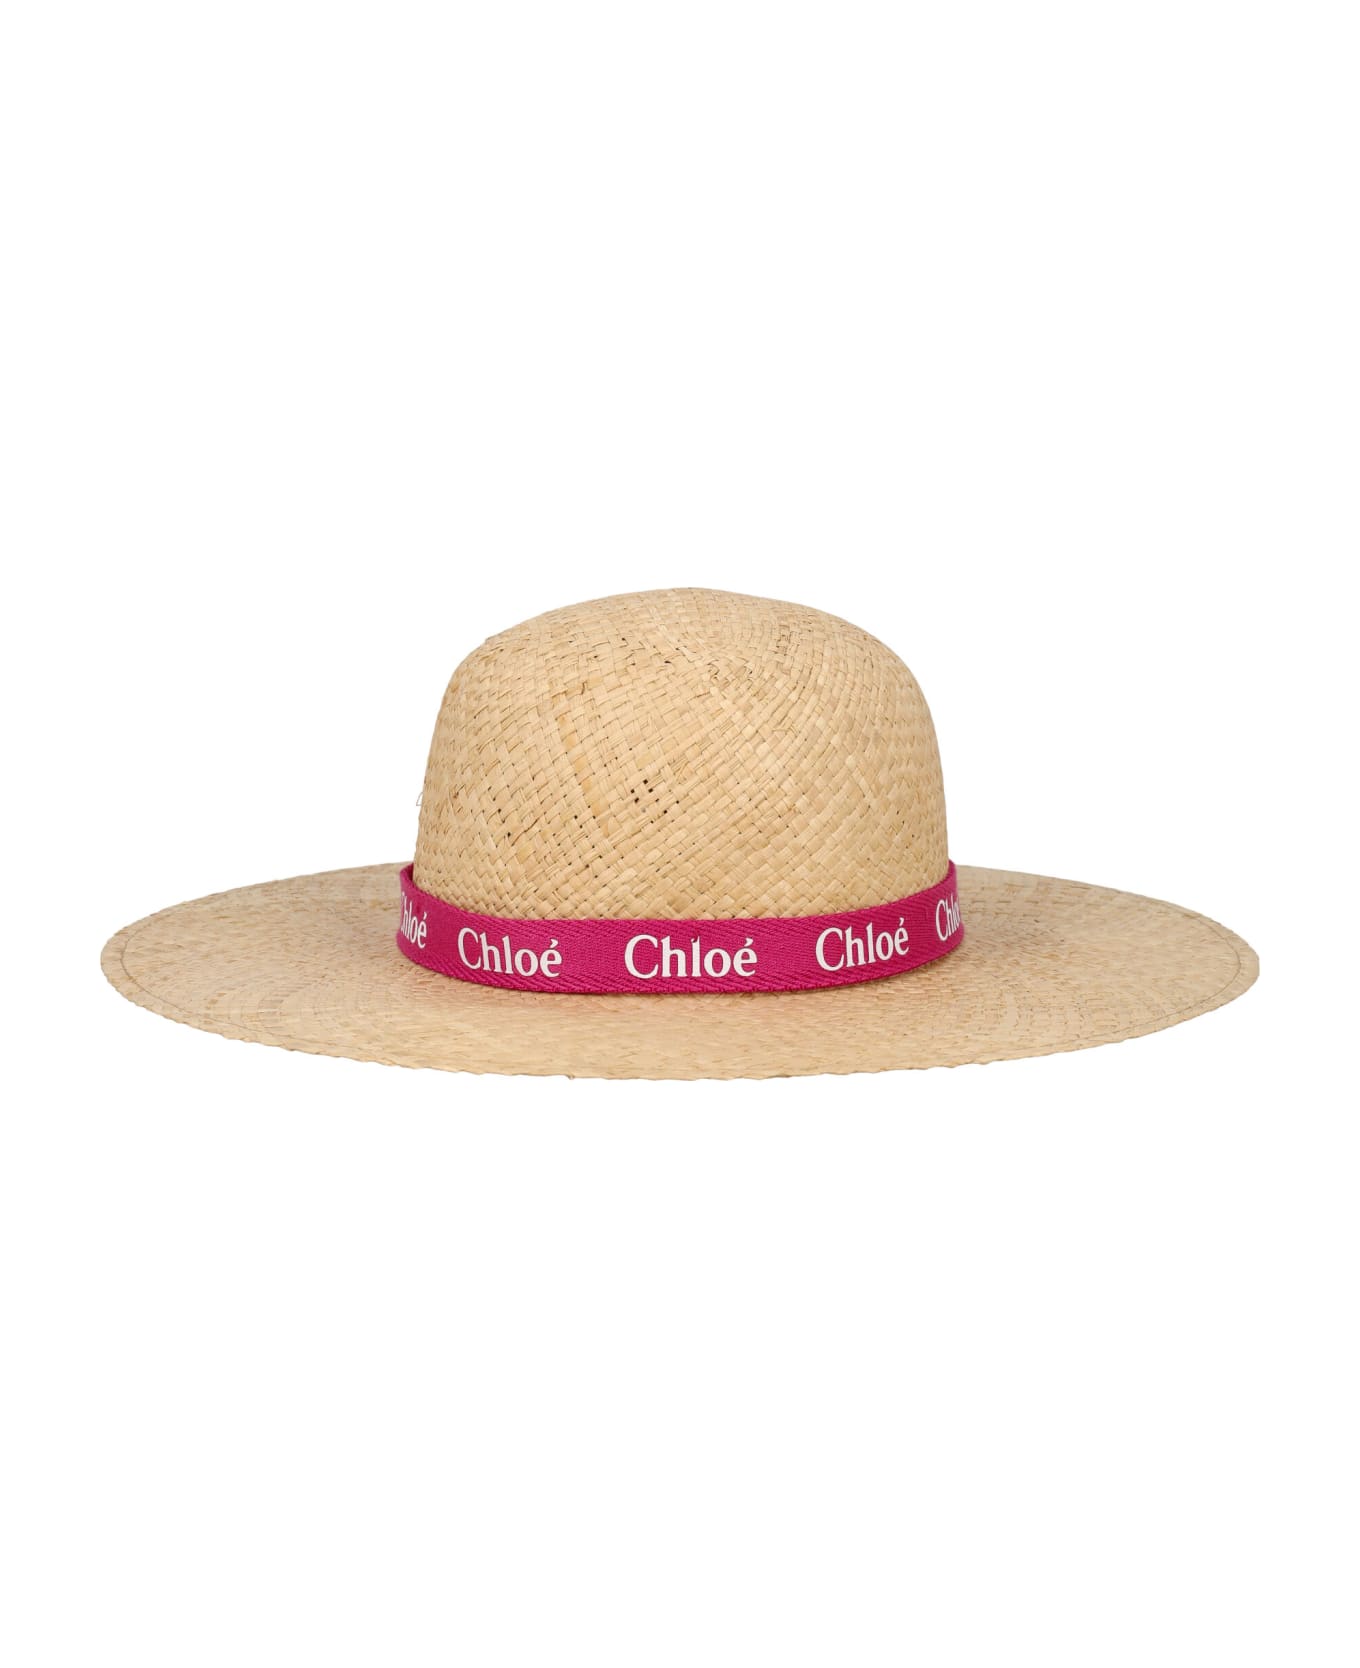 Chloé Raffia Summer Hat - NATURAL PINK